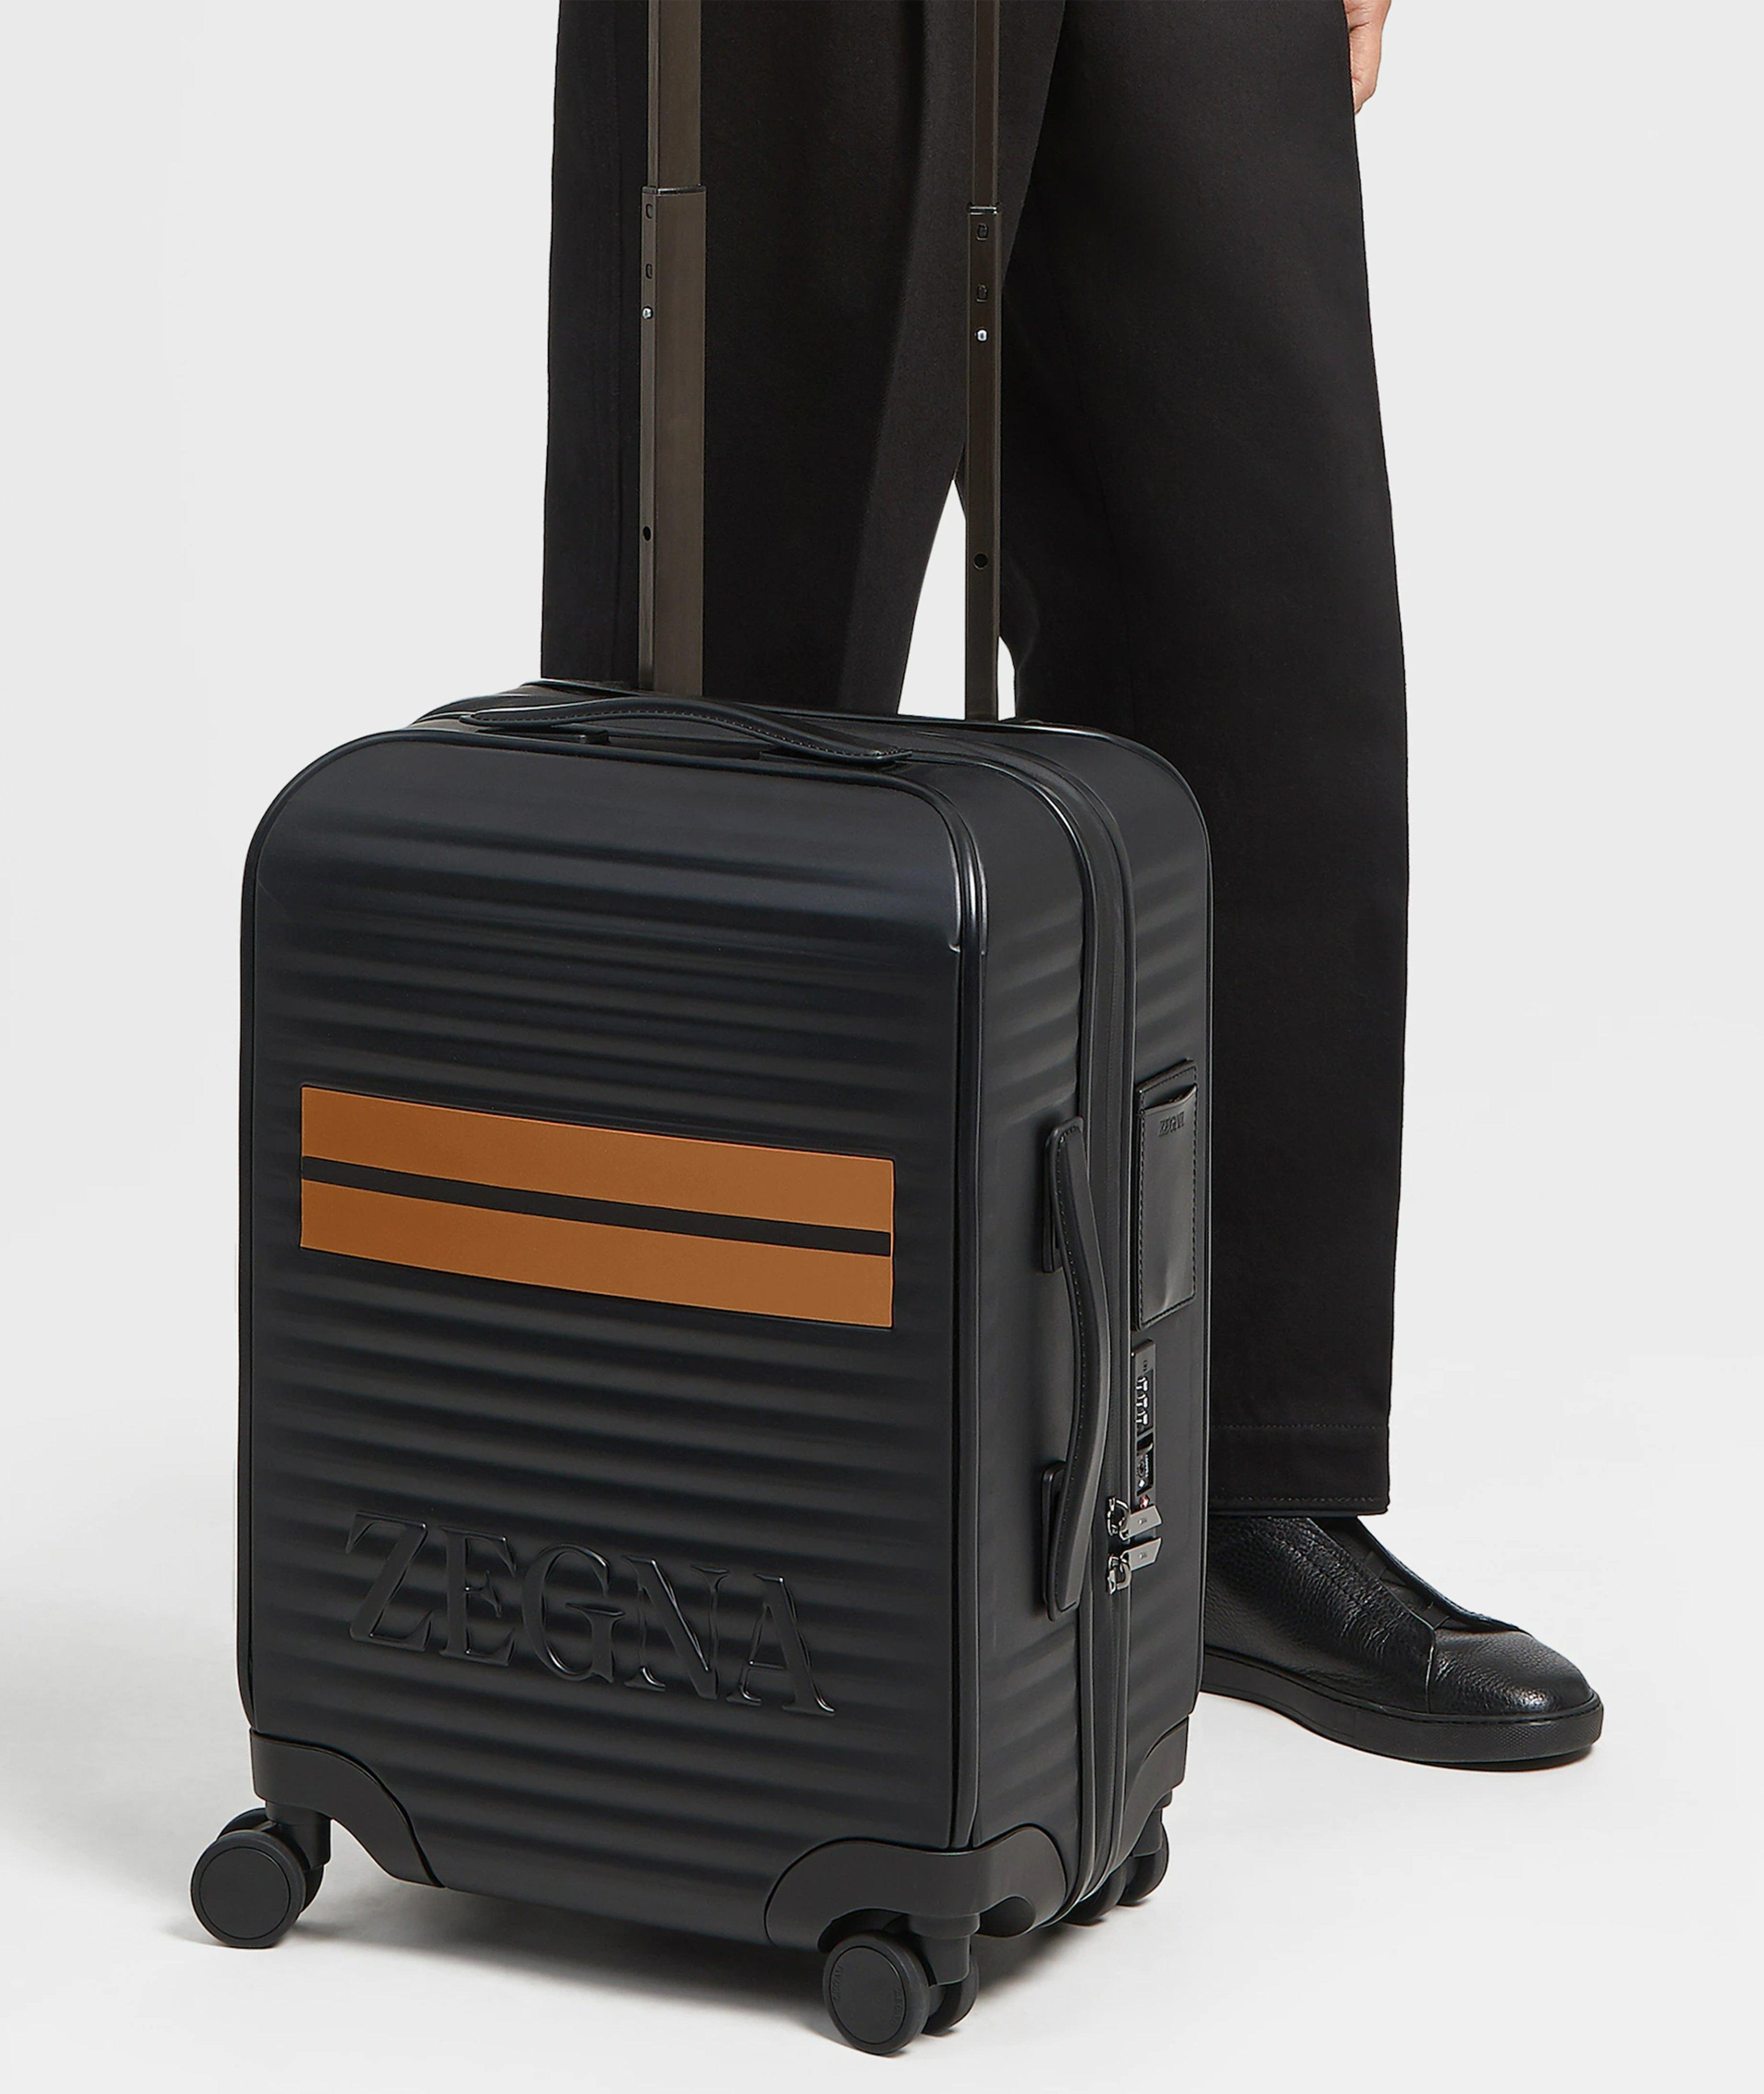 Technical Leggerissimo Trolley Suitcase image 1